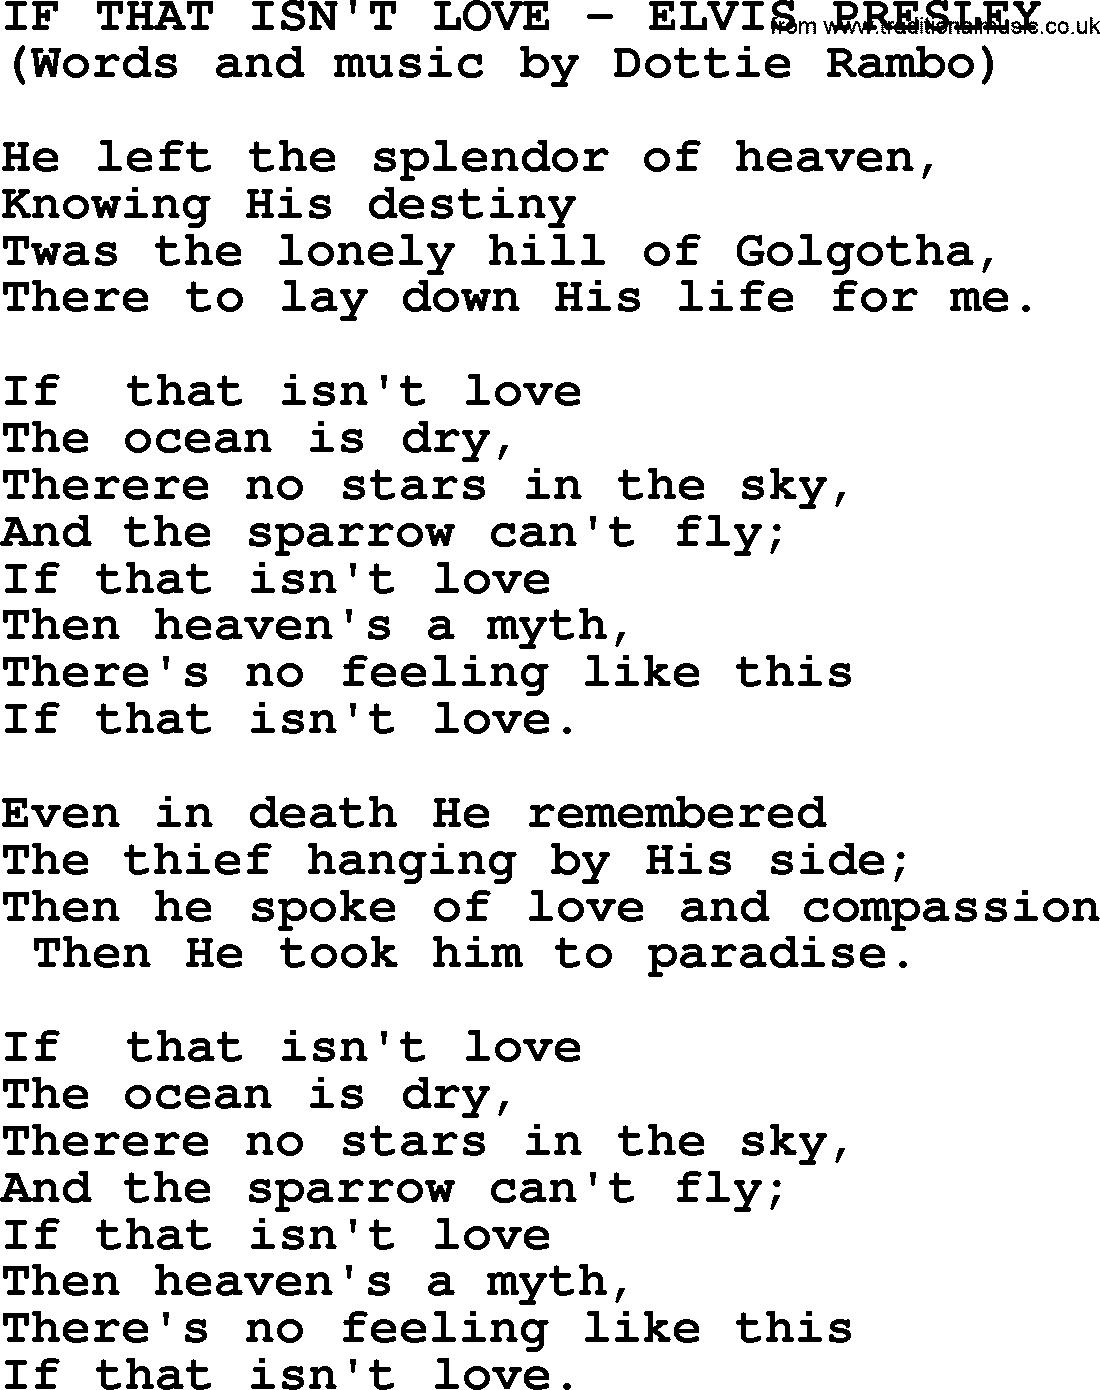 Elvis Presley song: If That Isn't Love lyrics